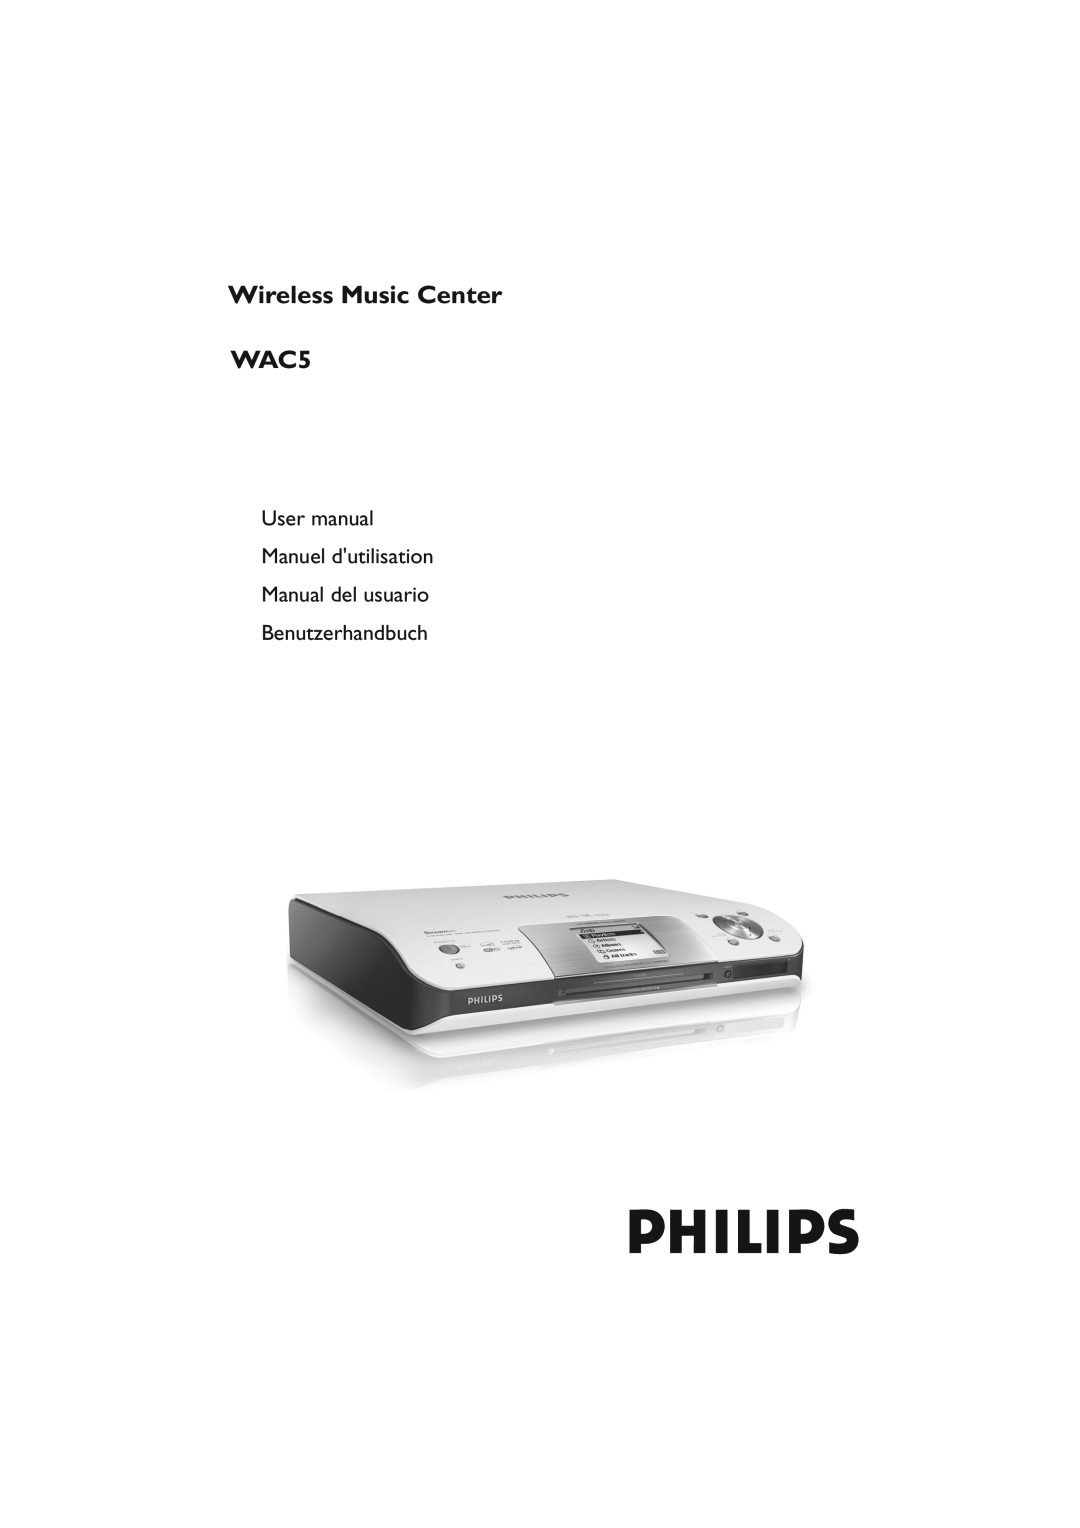 Philips WAC5 user manual Wireless Music Center, Manual del usuario Benutzerhandbuch 